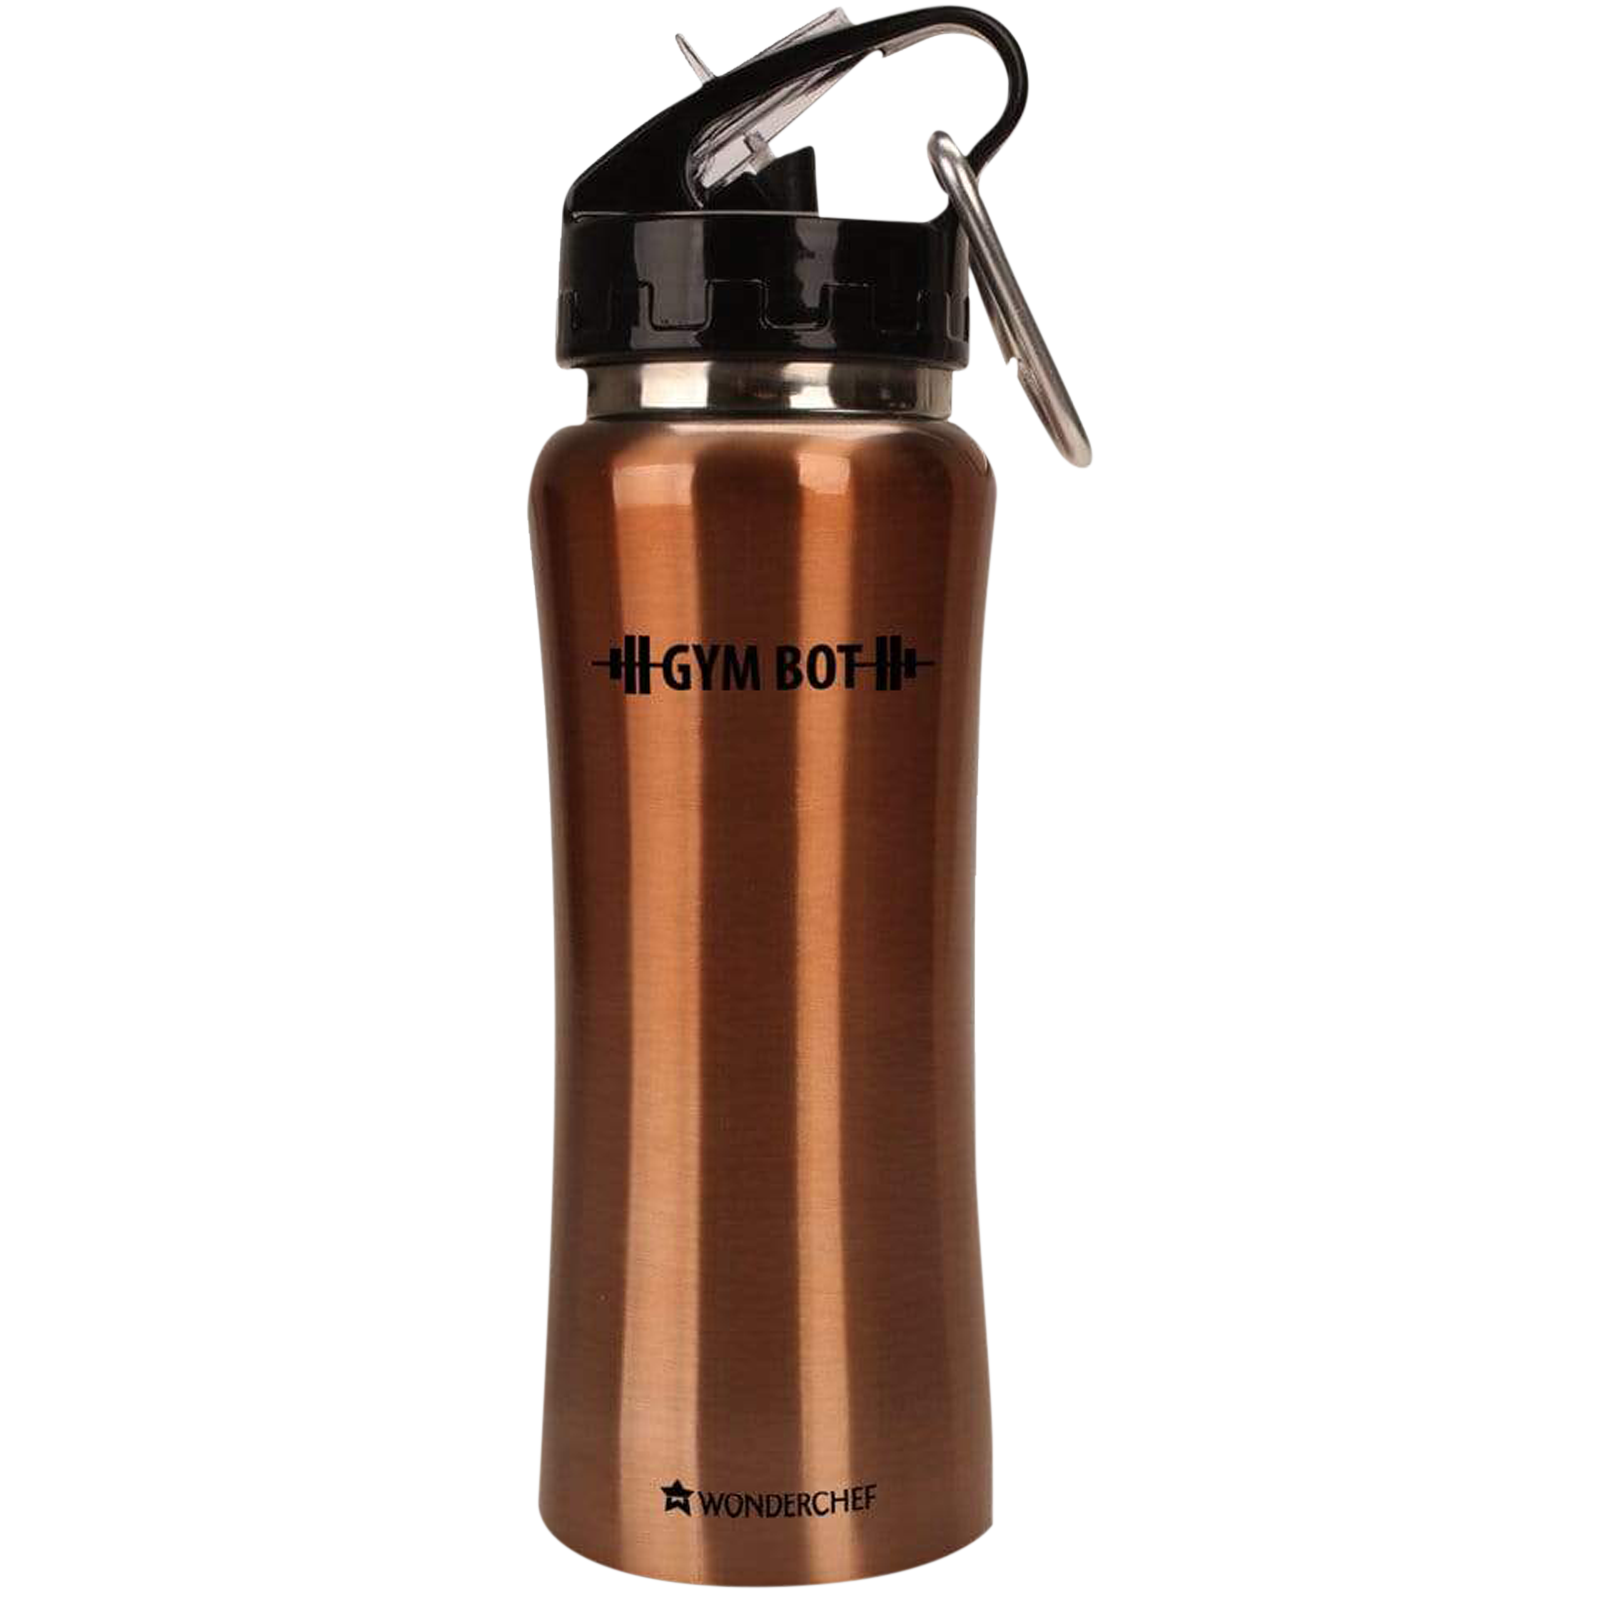 WONDERCHEF Gym-Bot 500ml Stainless Steel Single Wall Water Bottle (BPA Free, Copper)